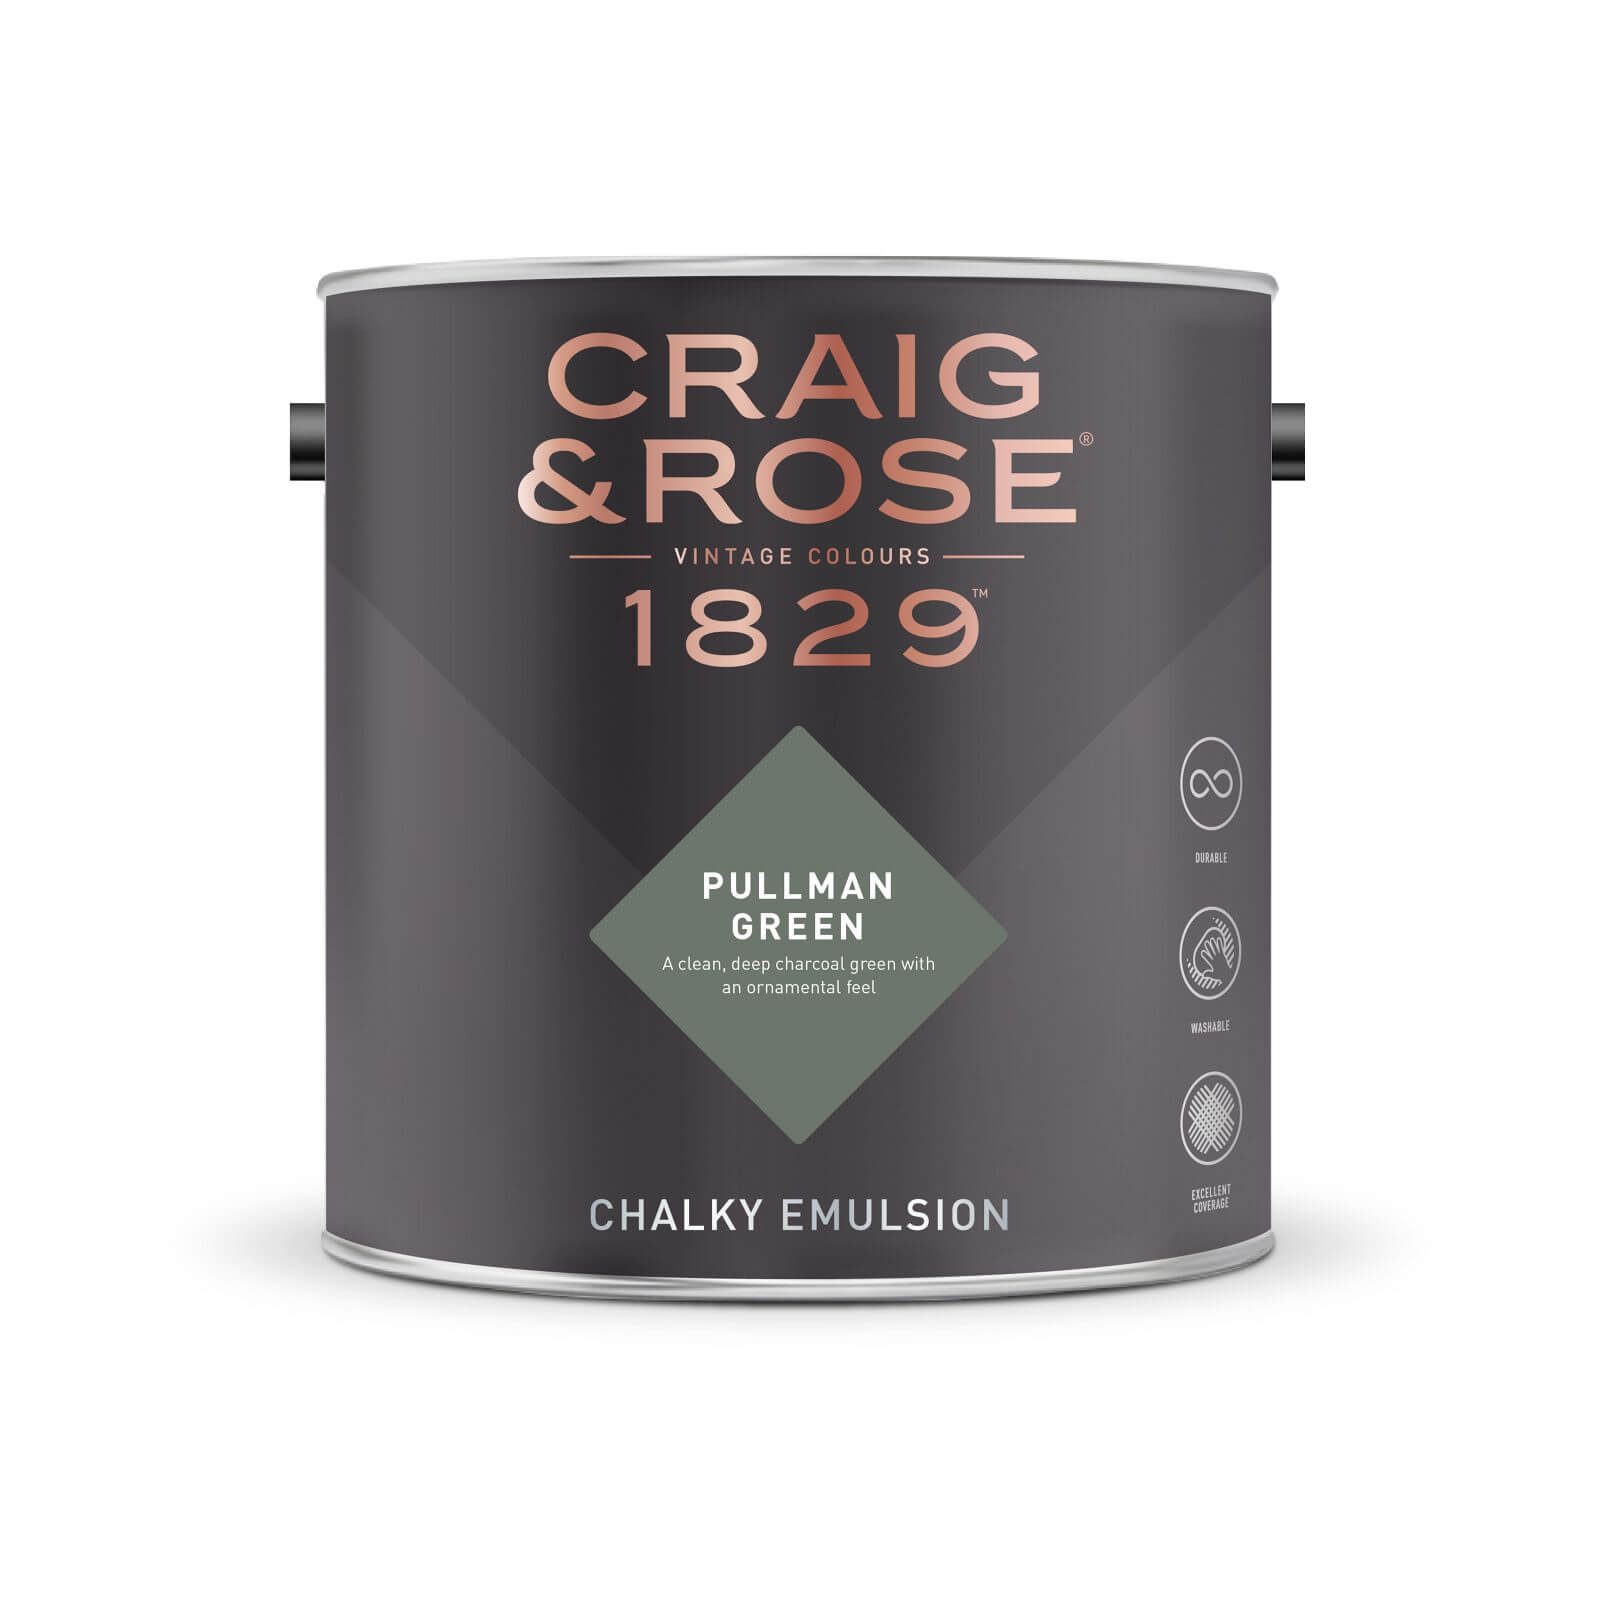 Craig & Rose 1829 Chalky Emulsion Paint Pullman Green - Tester 50ml